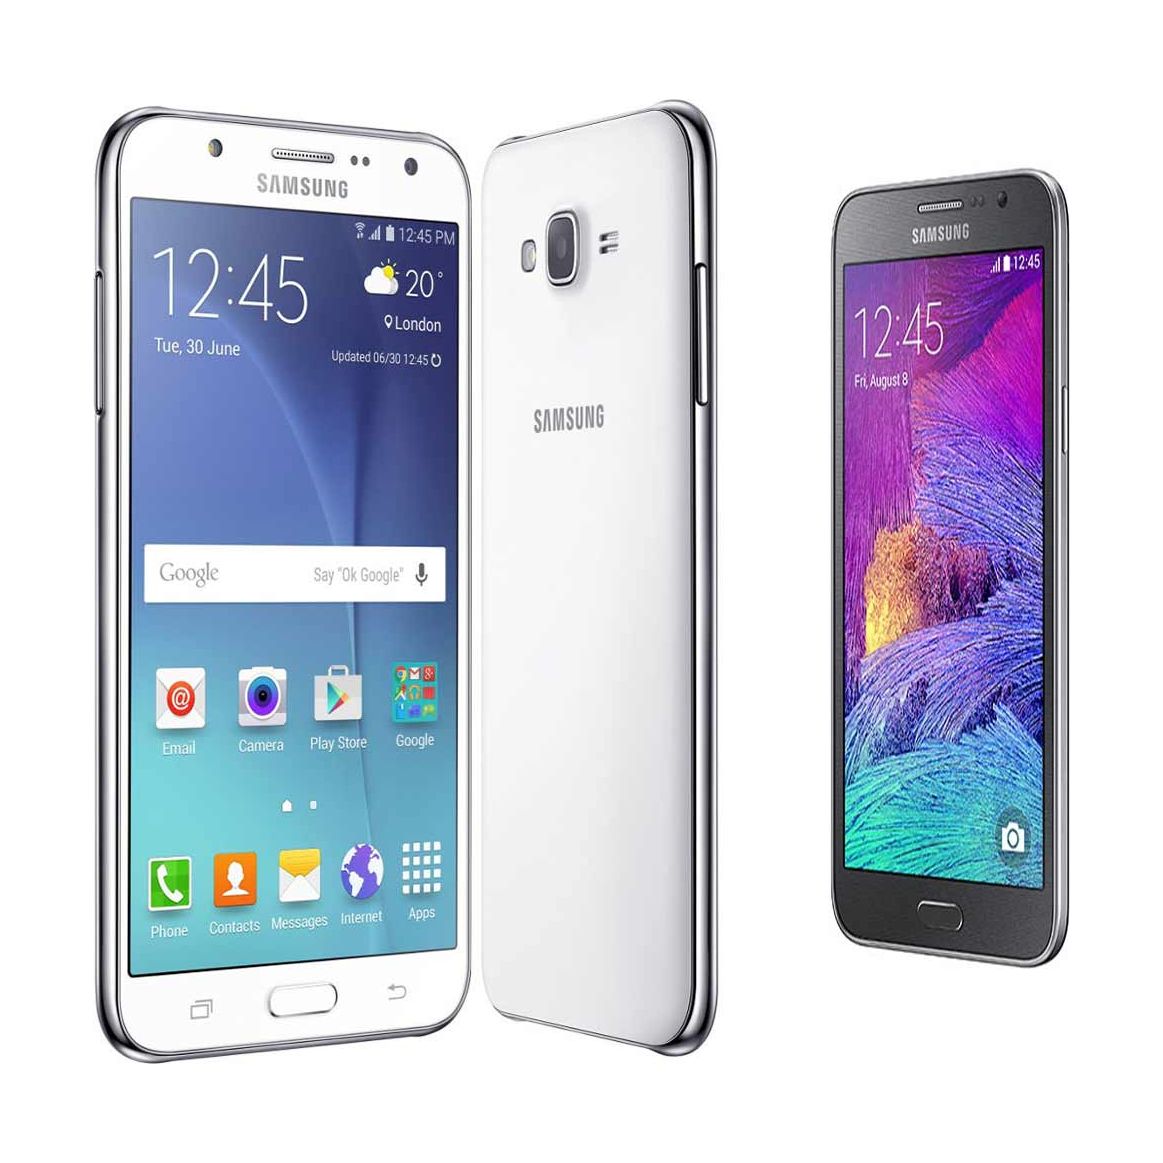 Samsung Galaxy J7 J710m 4G LTE Octa-core Phone w/ 13MP Camera -